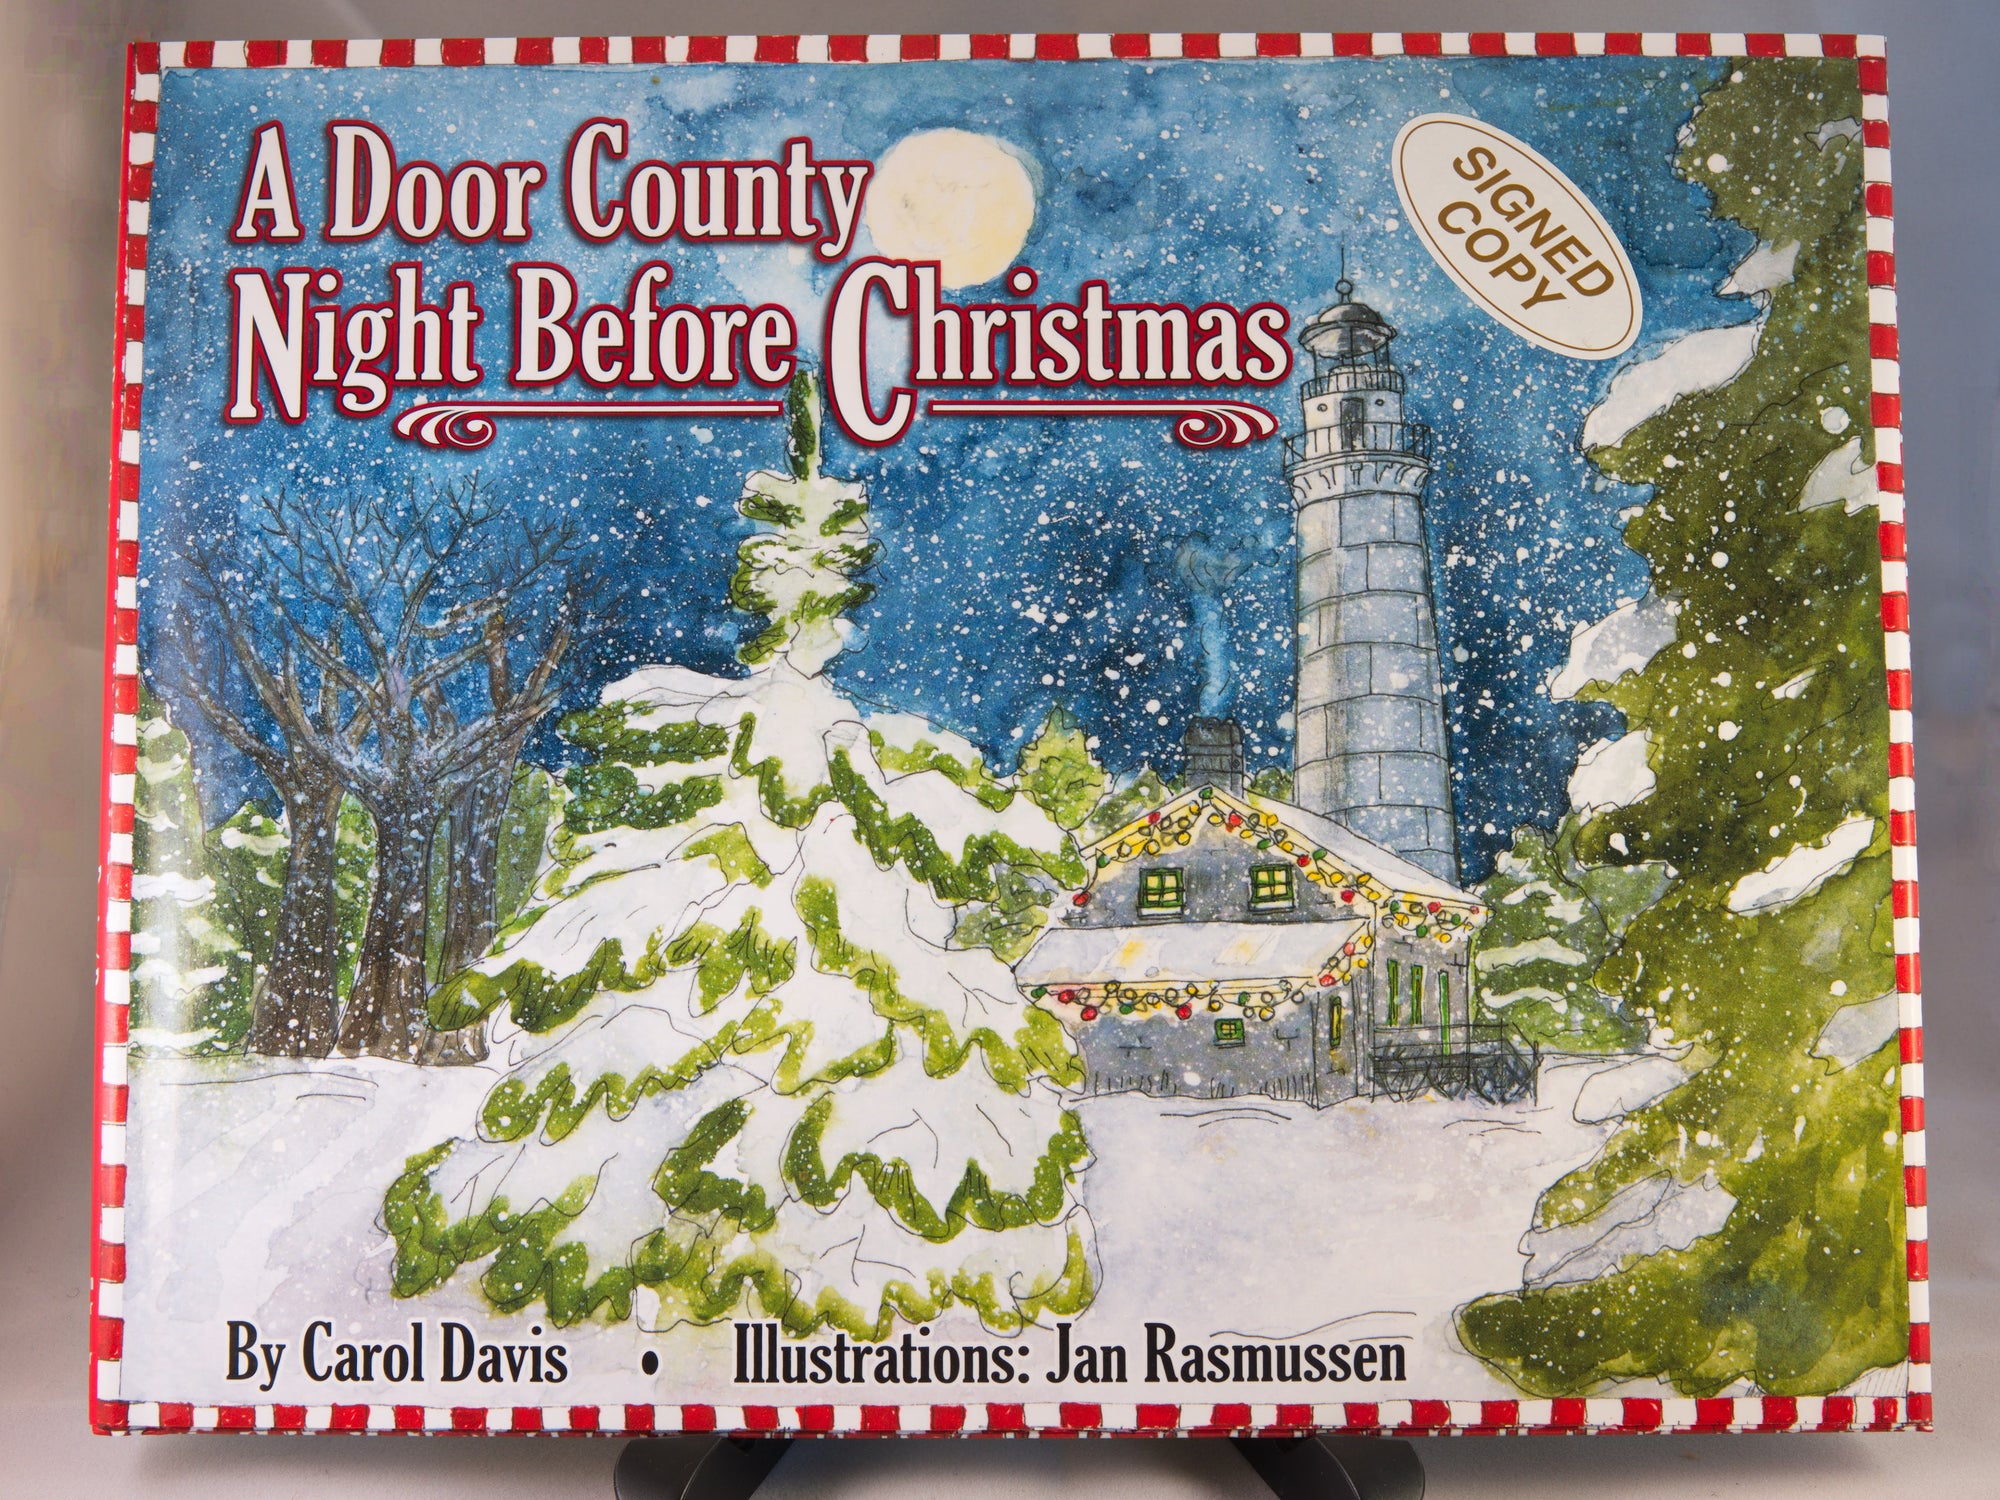 A Door County Night Before Christmas, Carol Davis author & Jan Rasmussen illustrator (IS) - Signed Copy